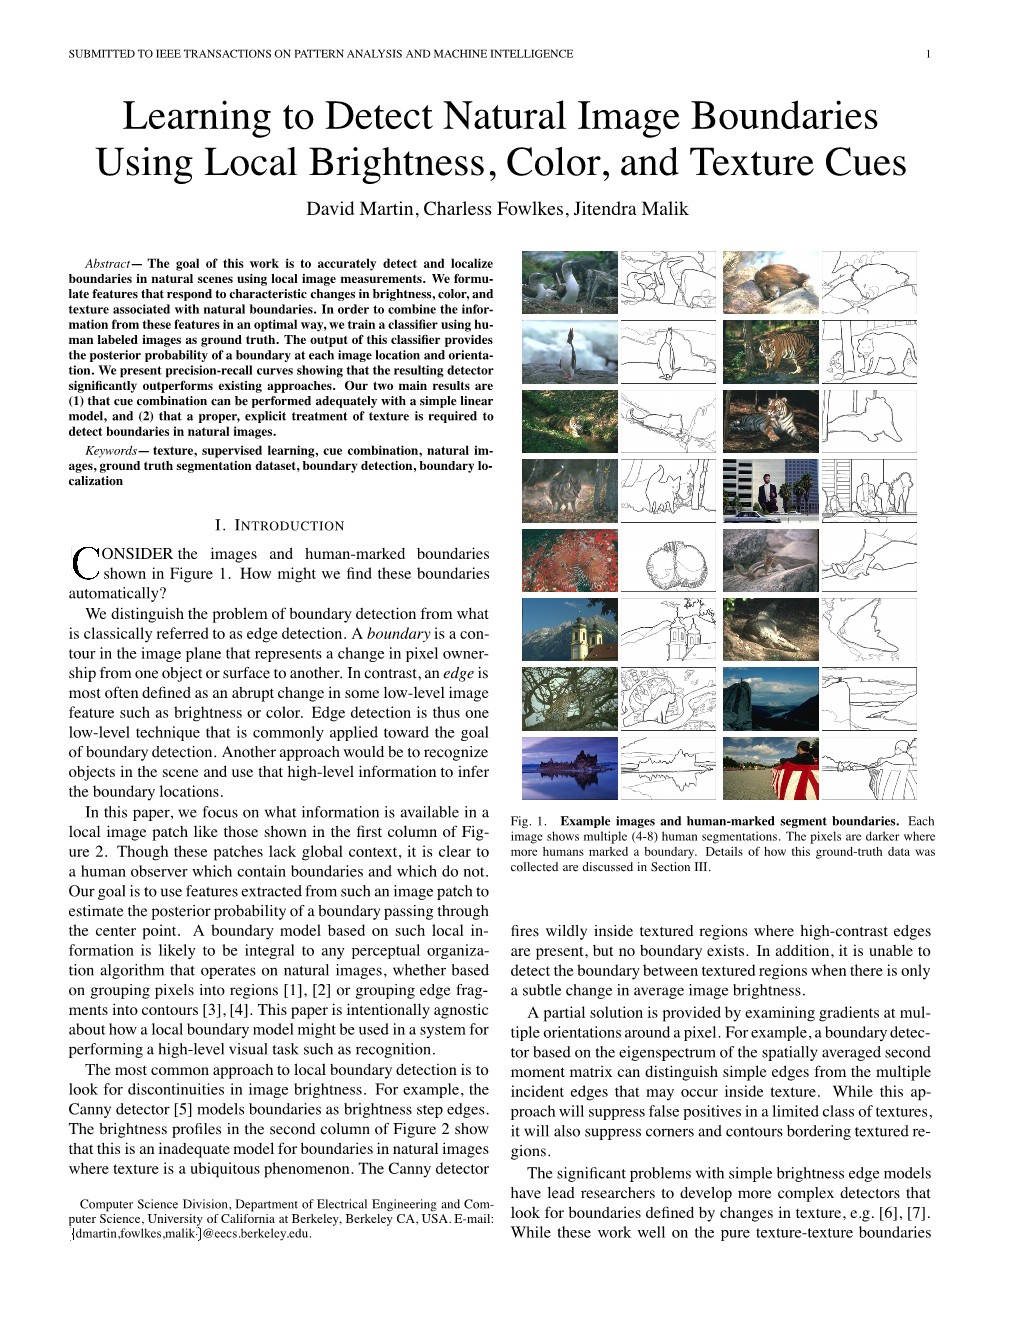 Learning to Detect Natural Image Boundaries Using Local Brightness, Color, and Texture Cues David Martin, Charless Fowlkes, Jitendra Malik